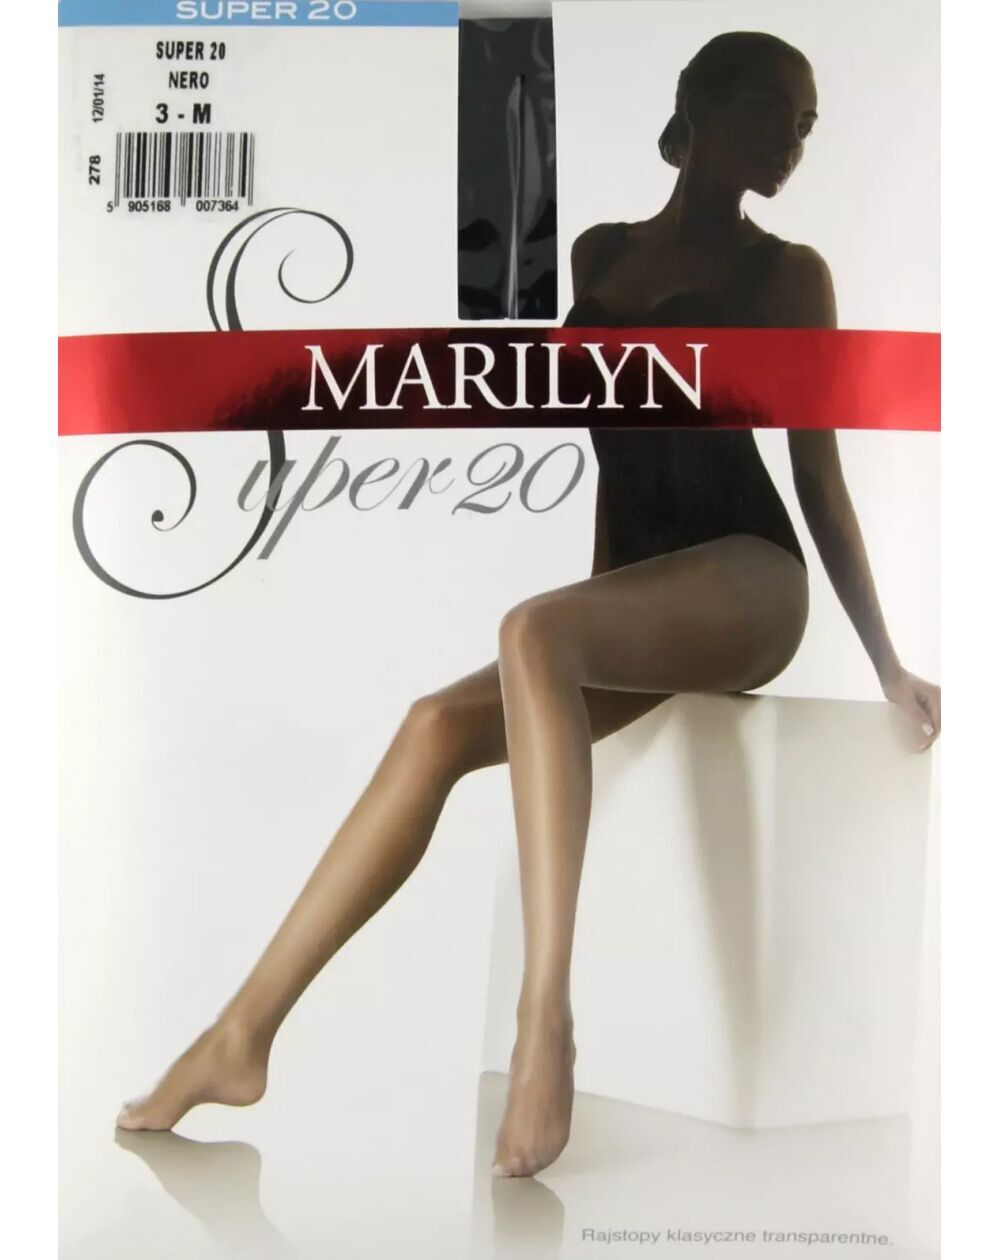 Marilyn SUPER 20